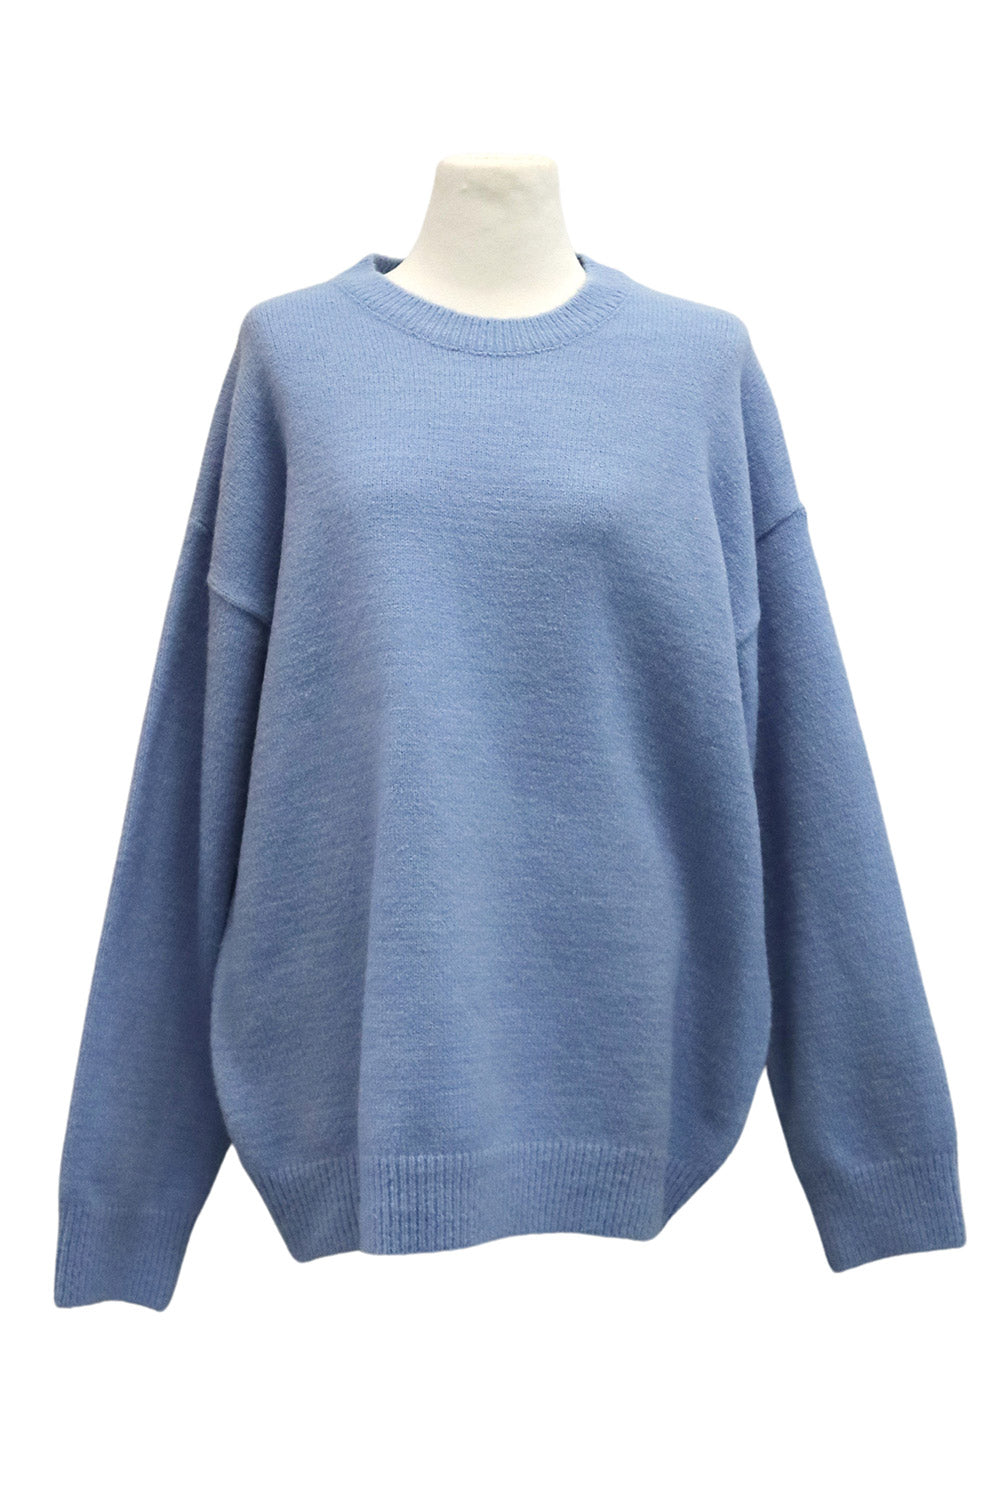 storets.com Mille Round Neck Sweater